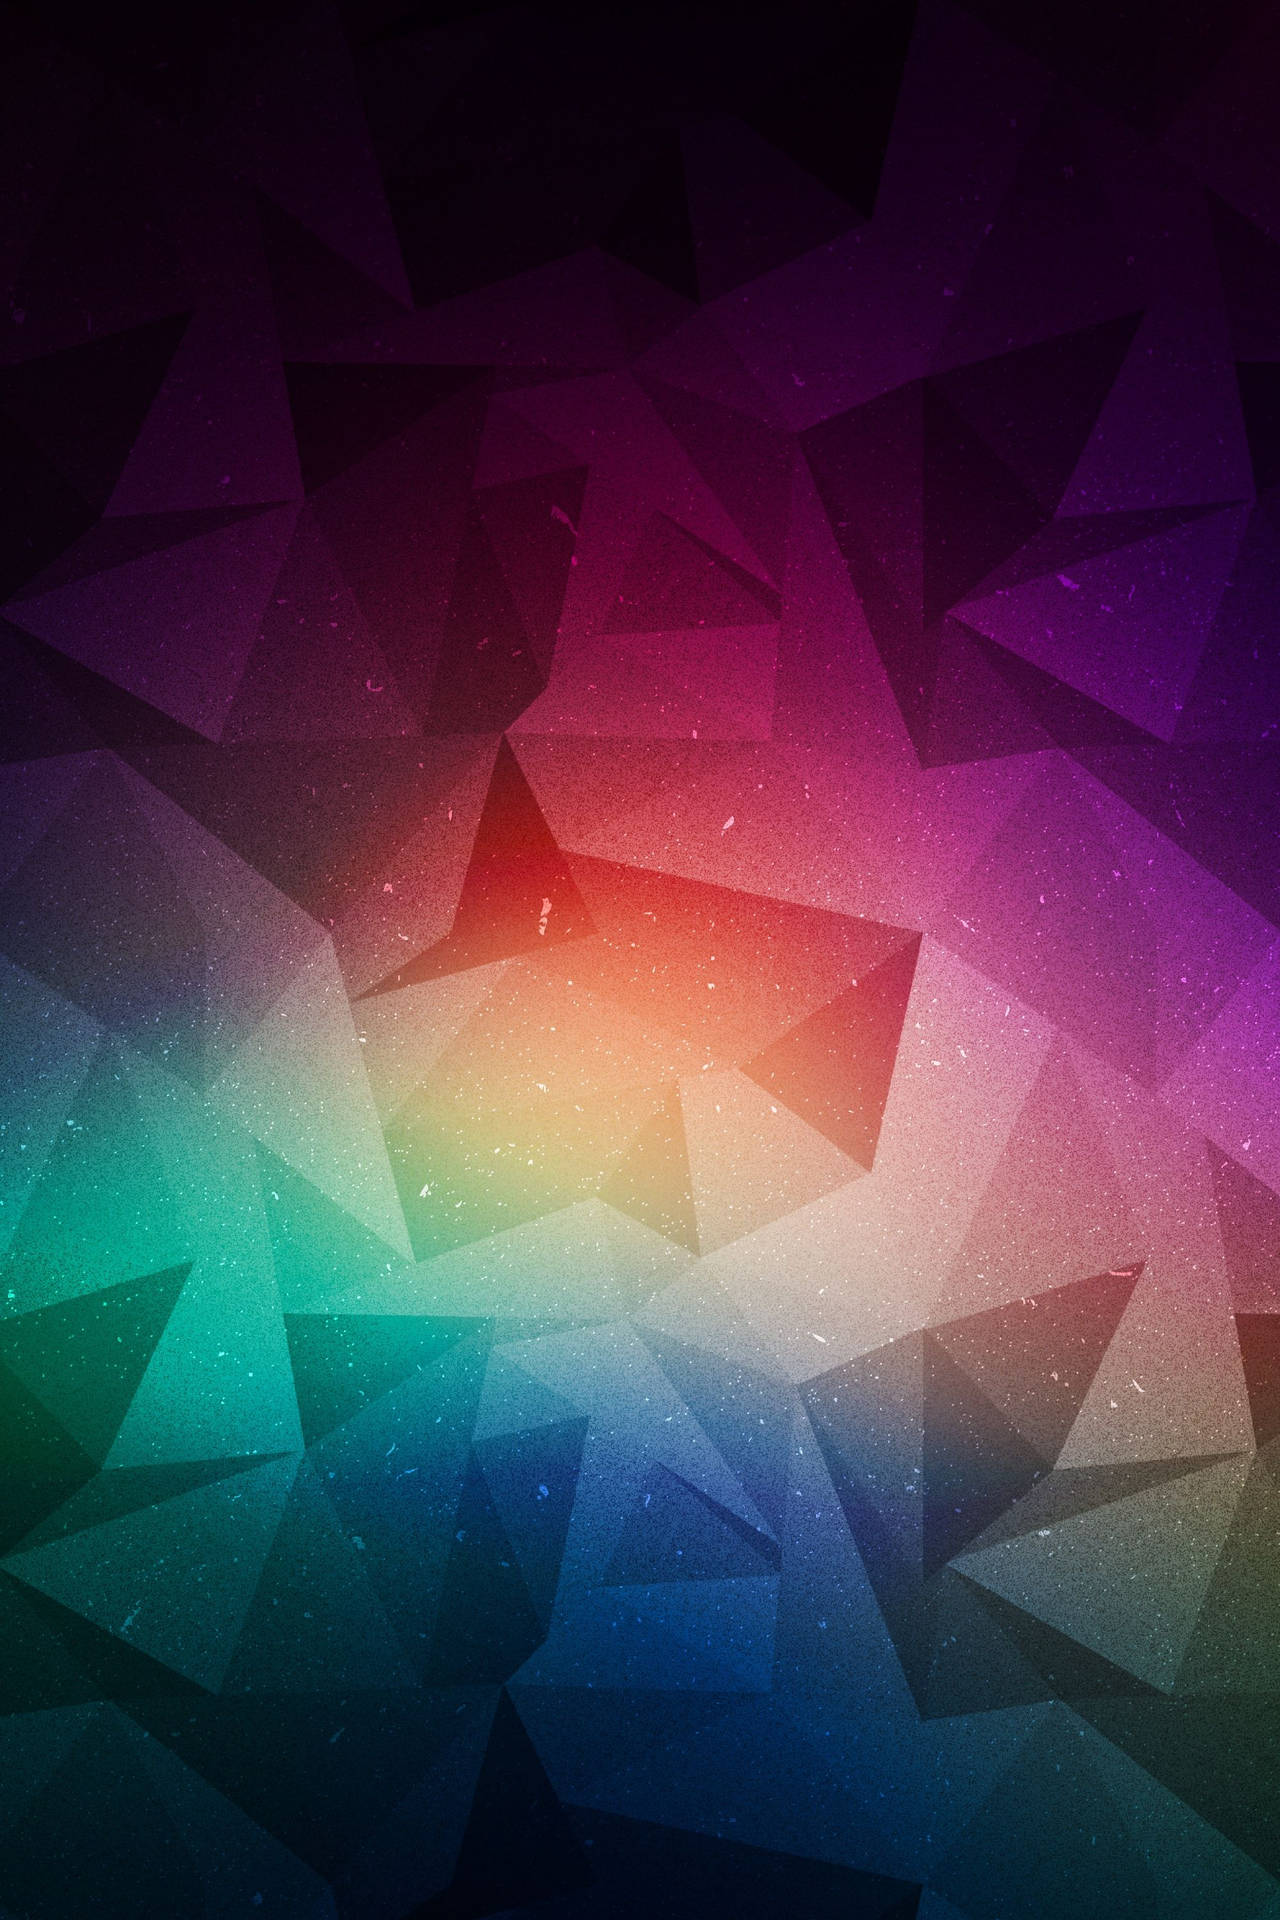 A Geometric Grunge Neon Explosion Wallpaper